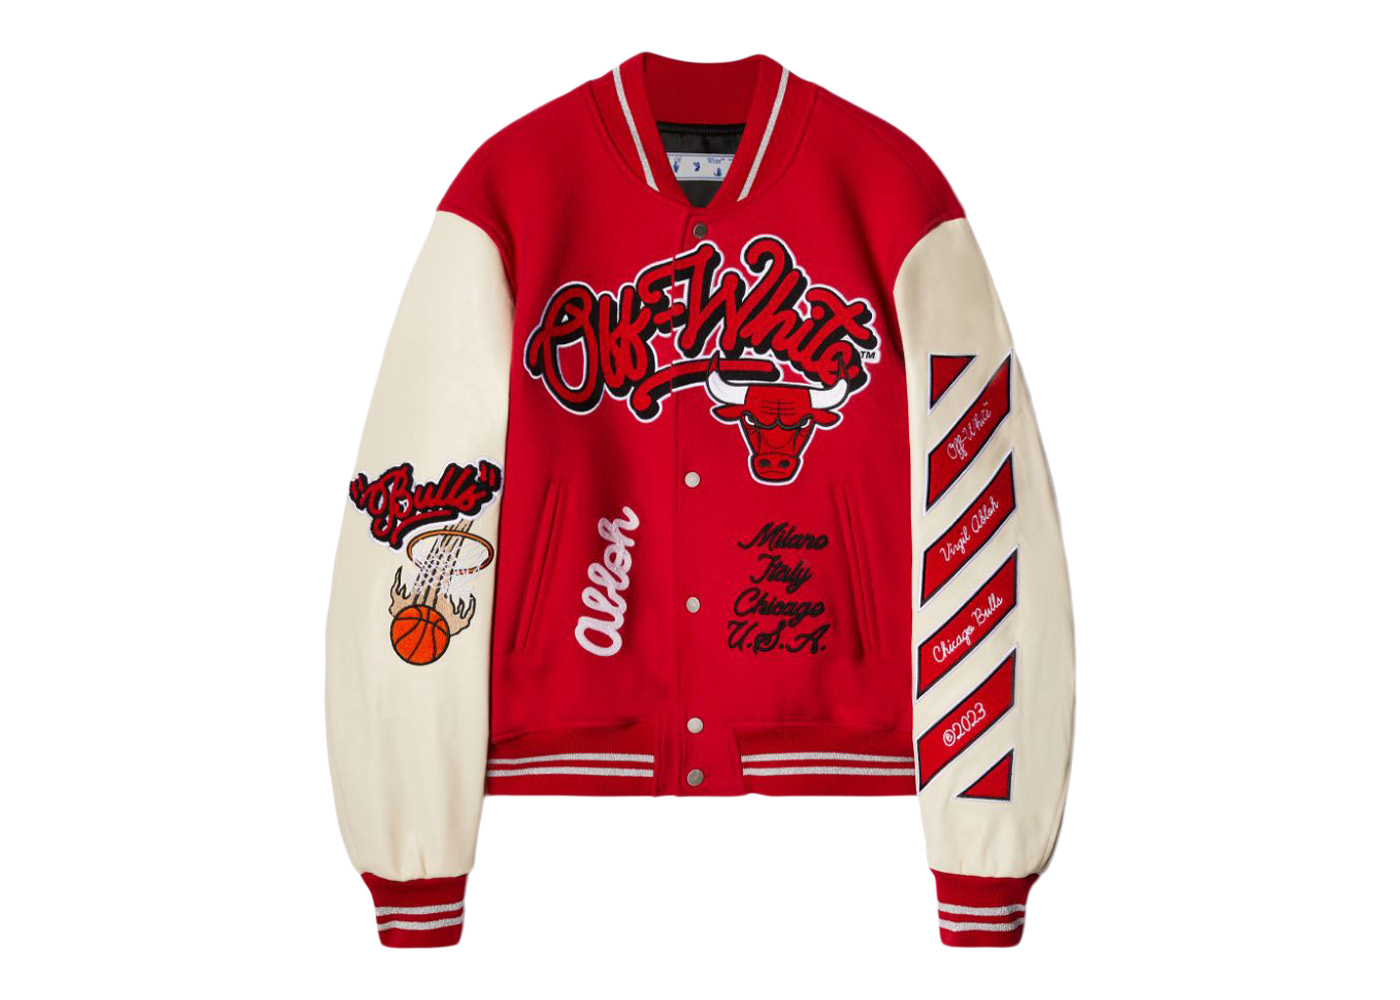 OFF-WHITE C/O Chicago Bulls Varsity Jacket Black